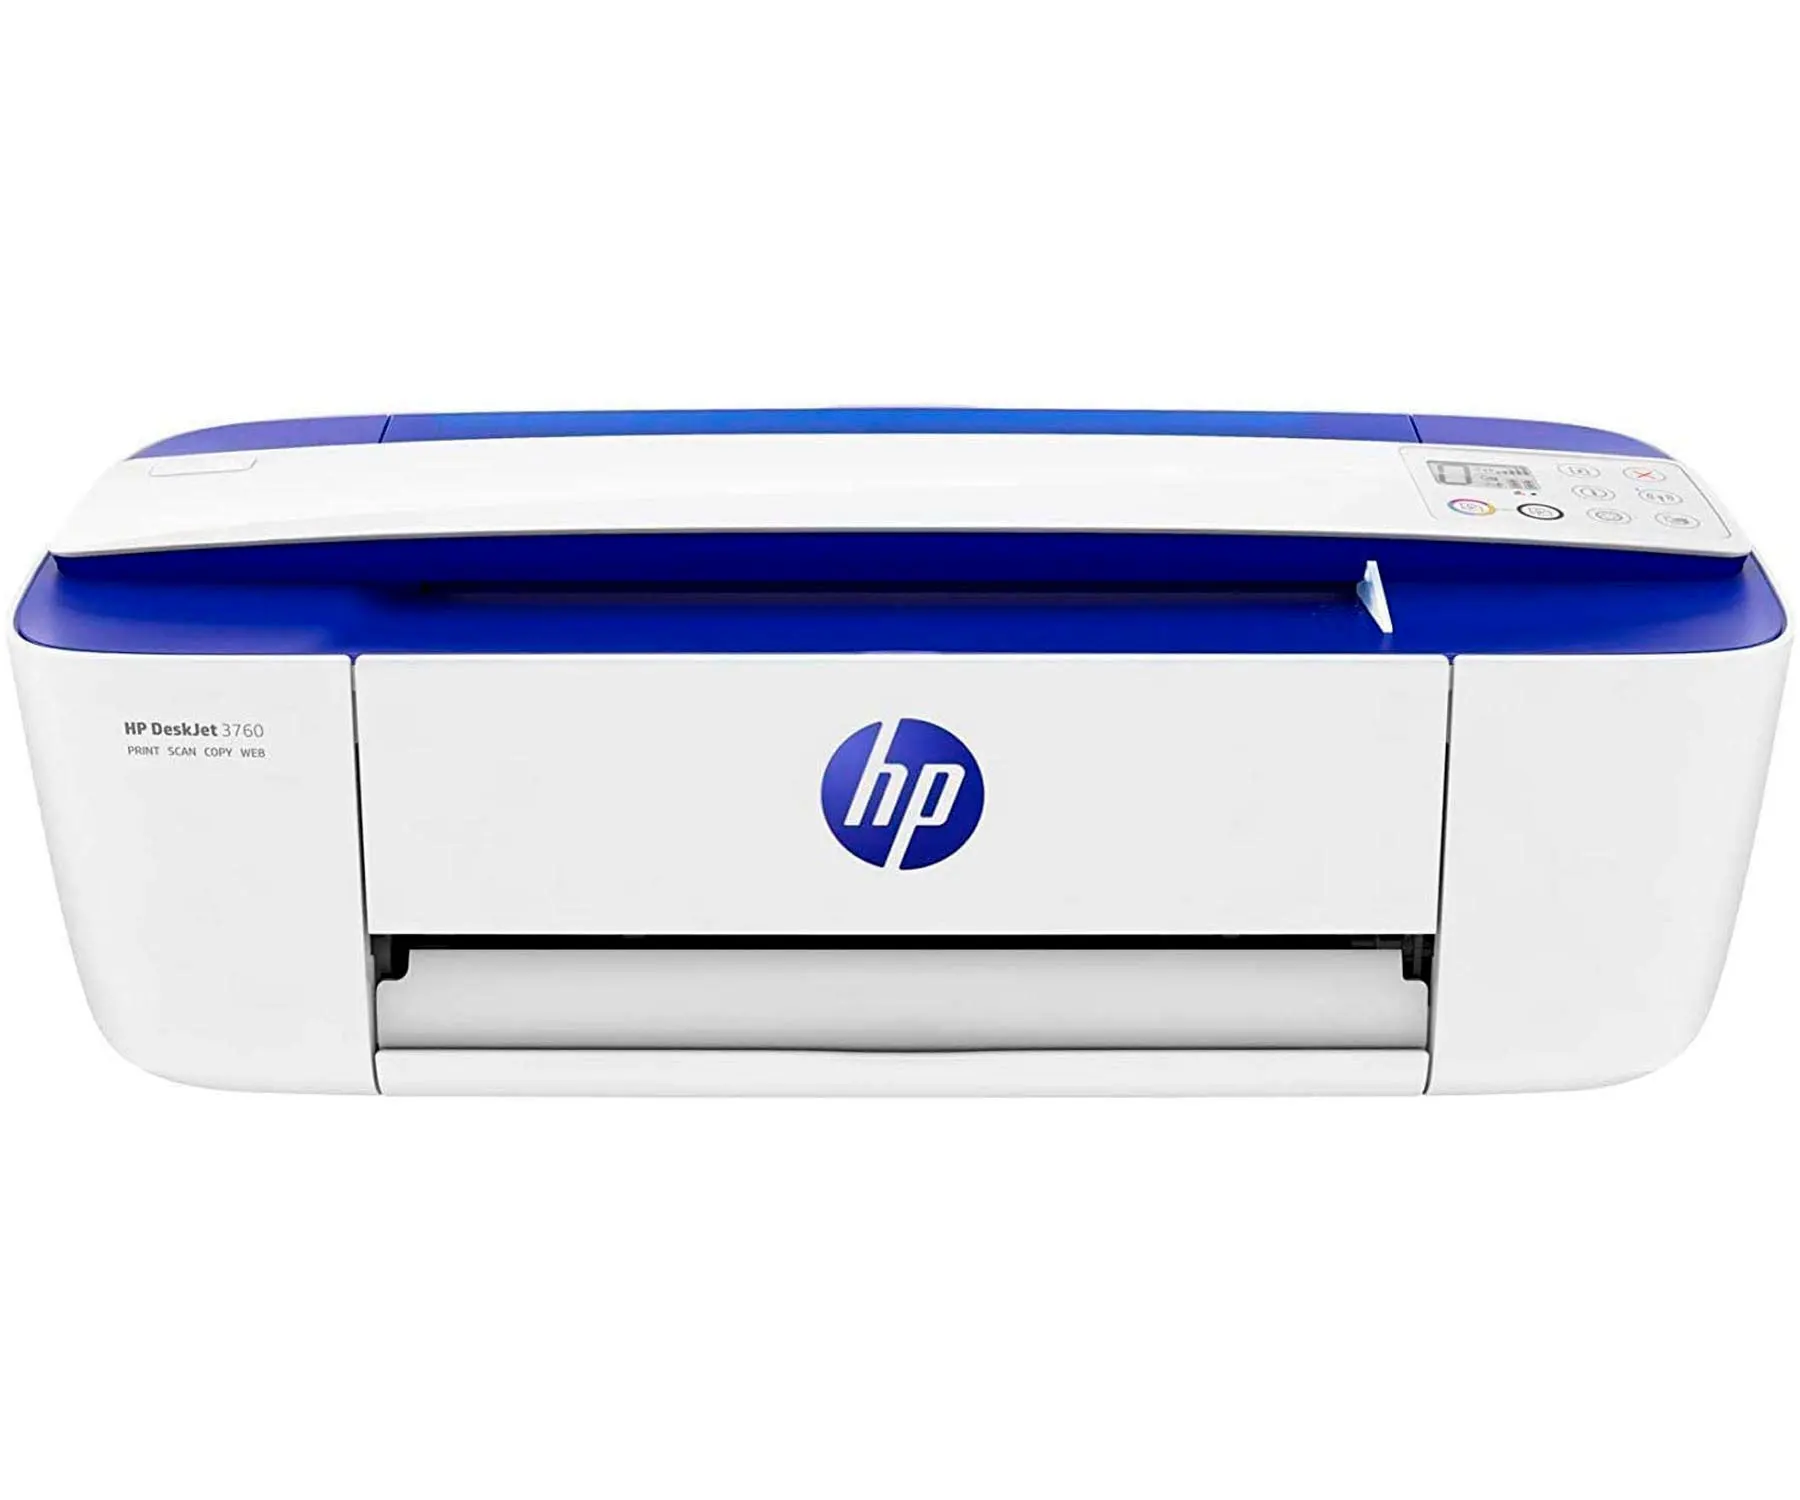 Hp deskjet 3760 – imprimante sans fil wifi multifonction, impression, copie  et scanner | AliExpress